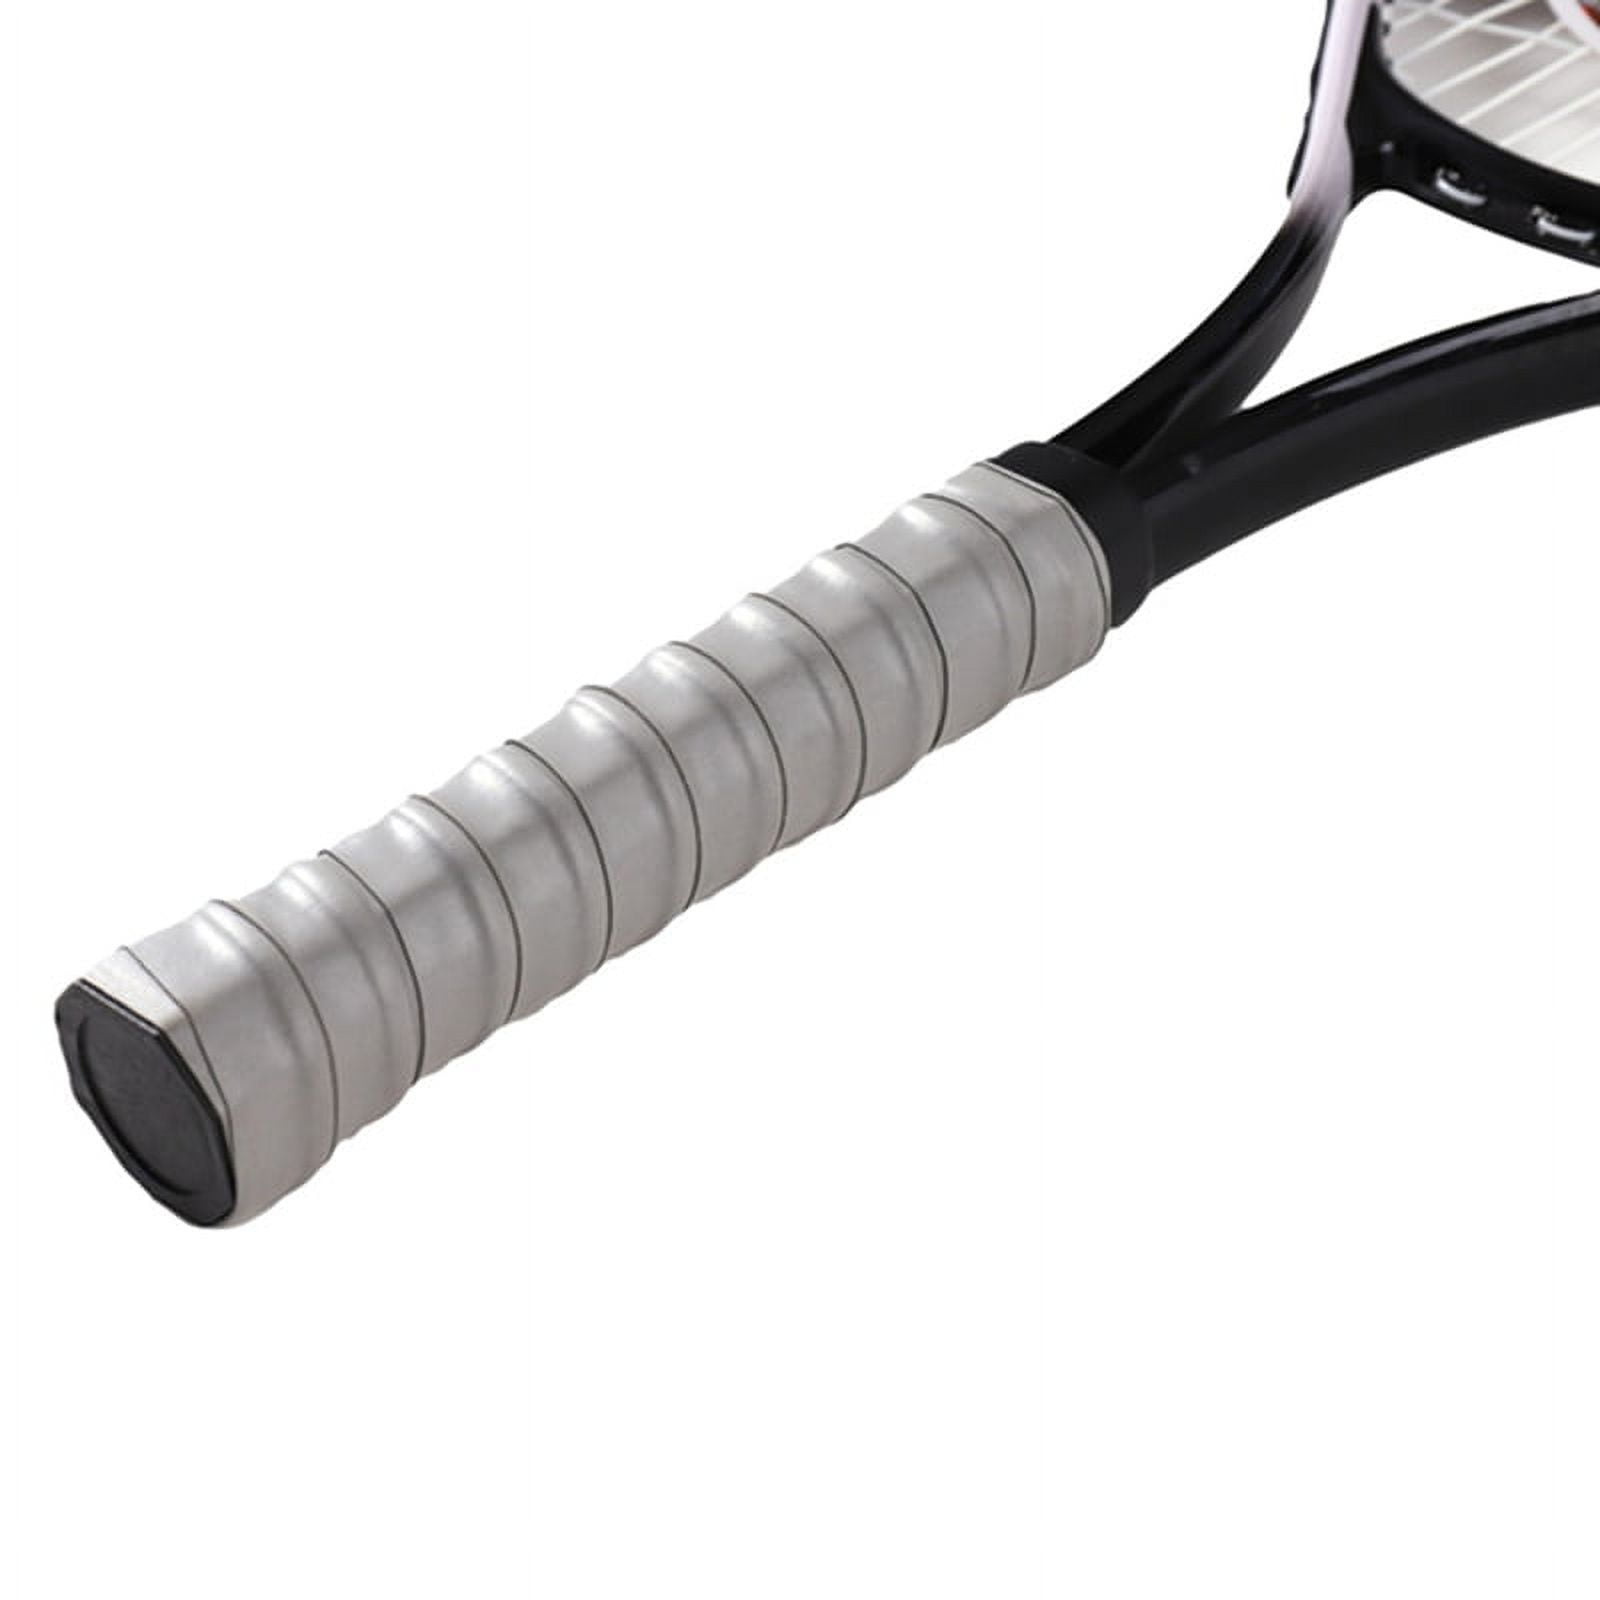 Tennis Grip Tennis Overgrip Leather Grip Tennis Racket Grip Tape Grip  Raqueta Tenis Overgrip Padel Tennis Accessories